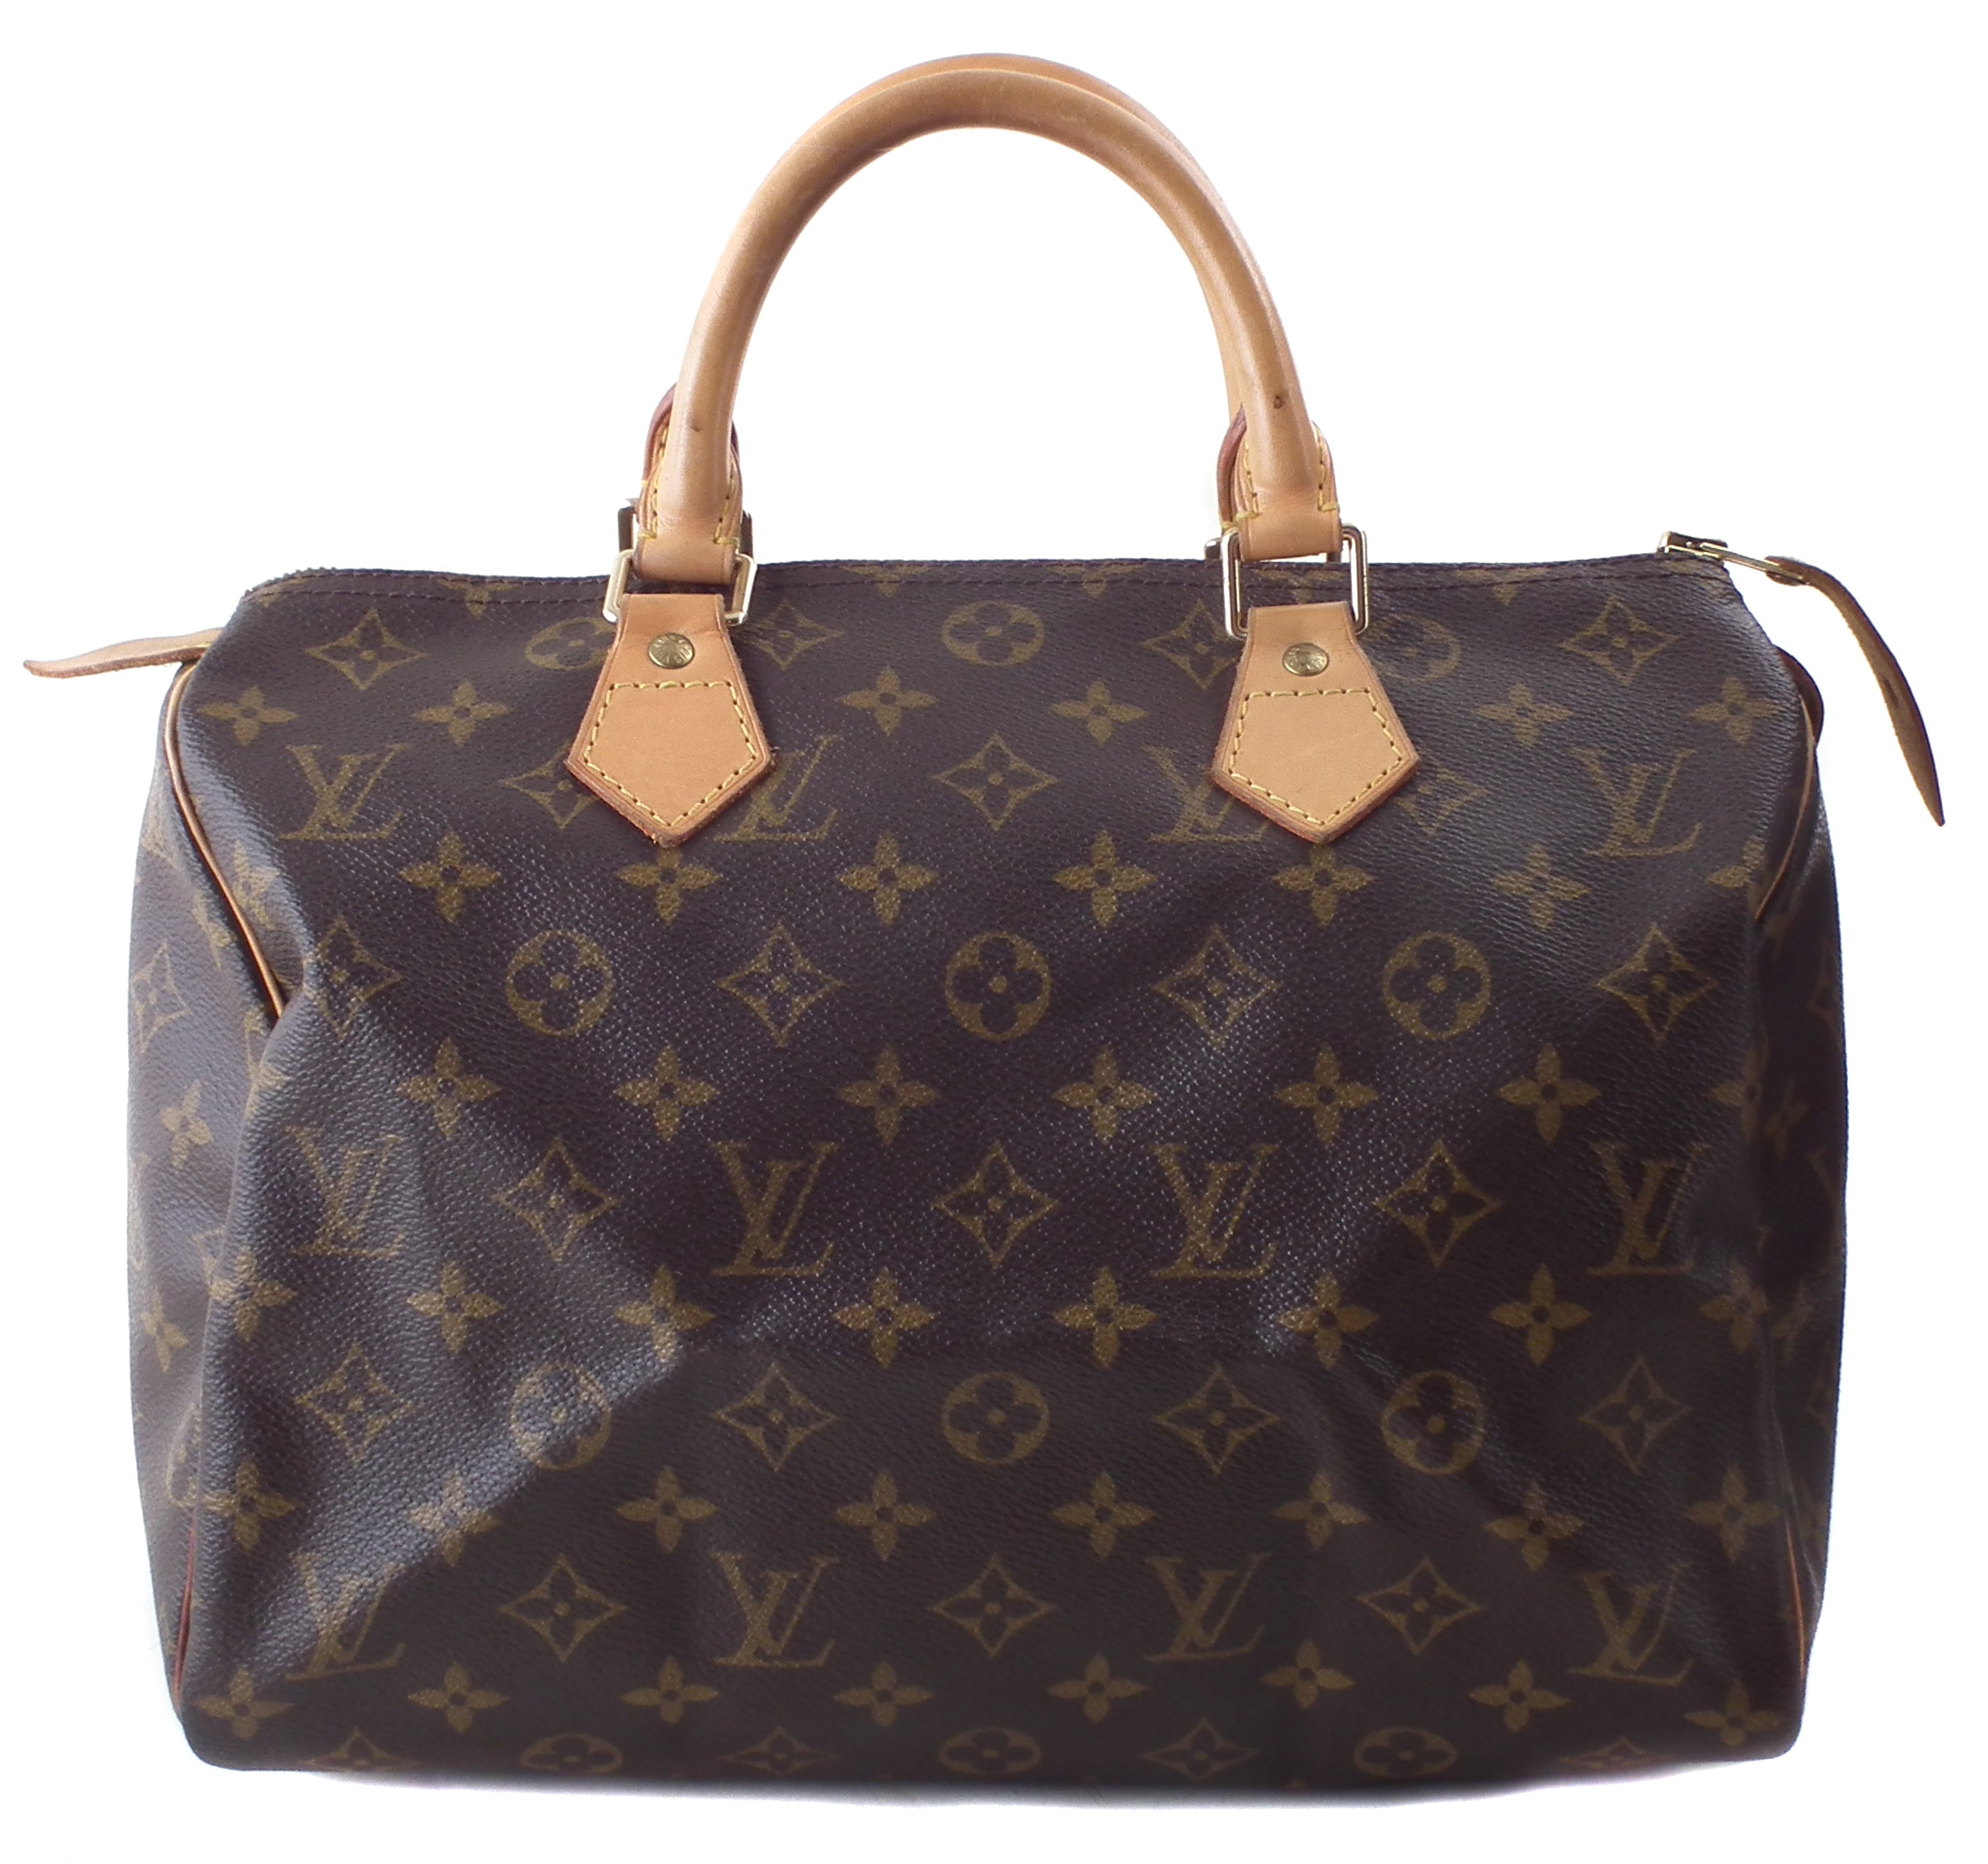 A Louis Vuitton monogram Speedy 30 handbag